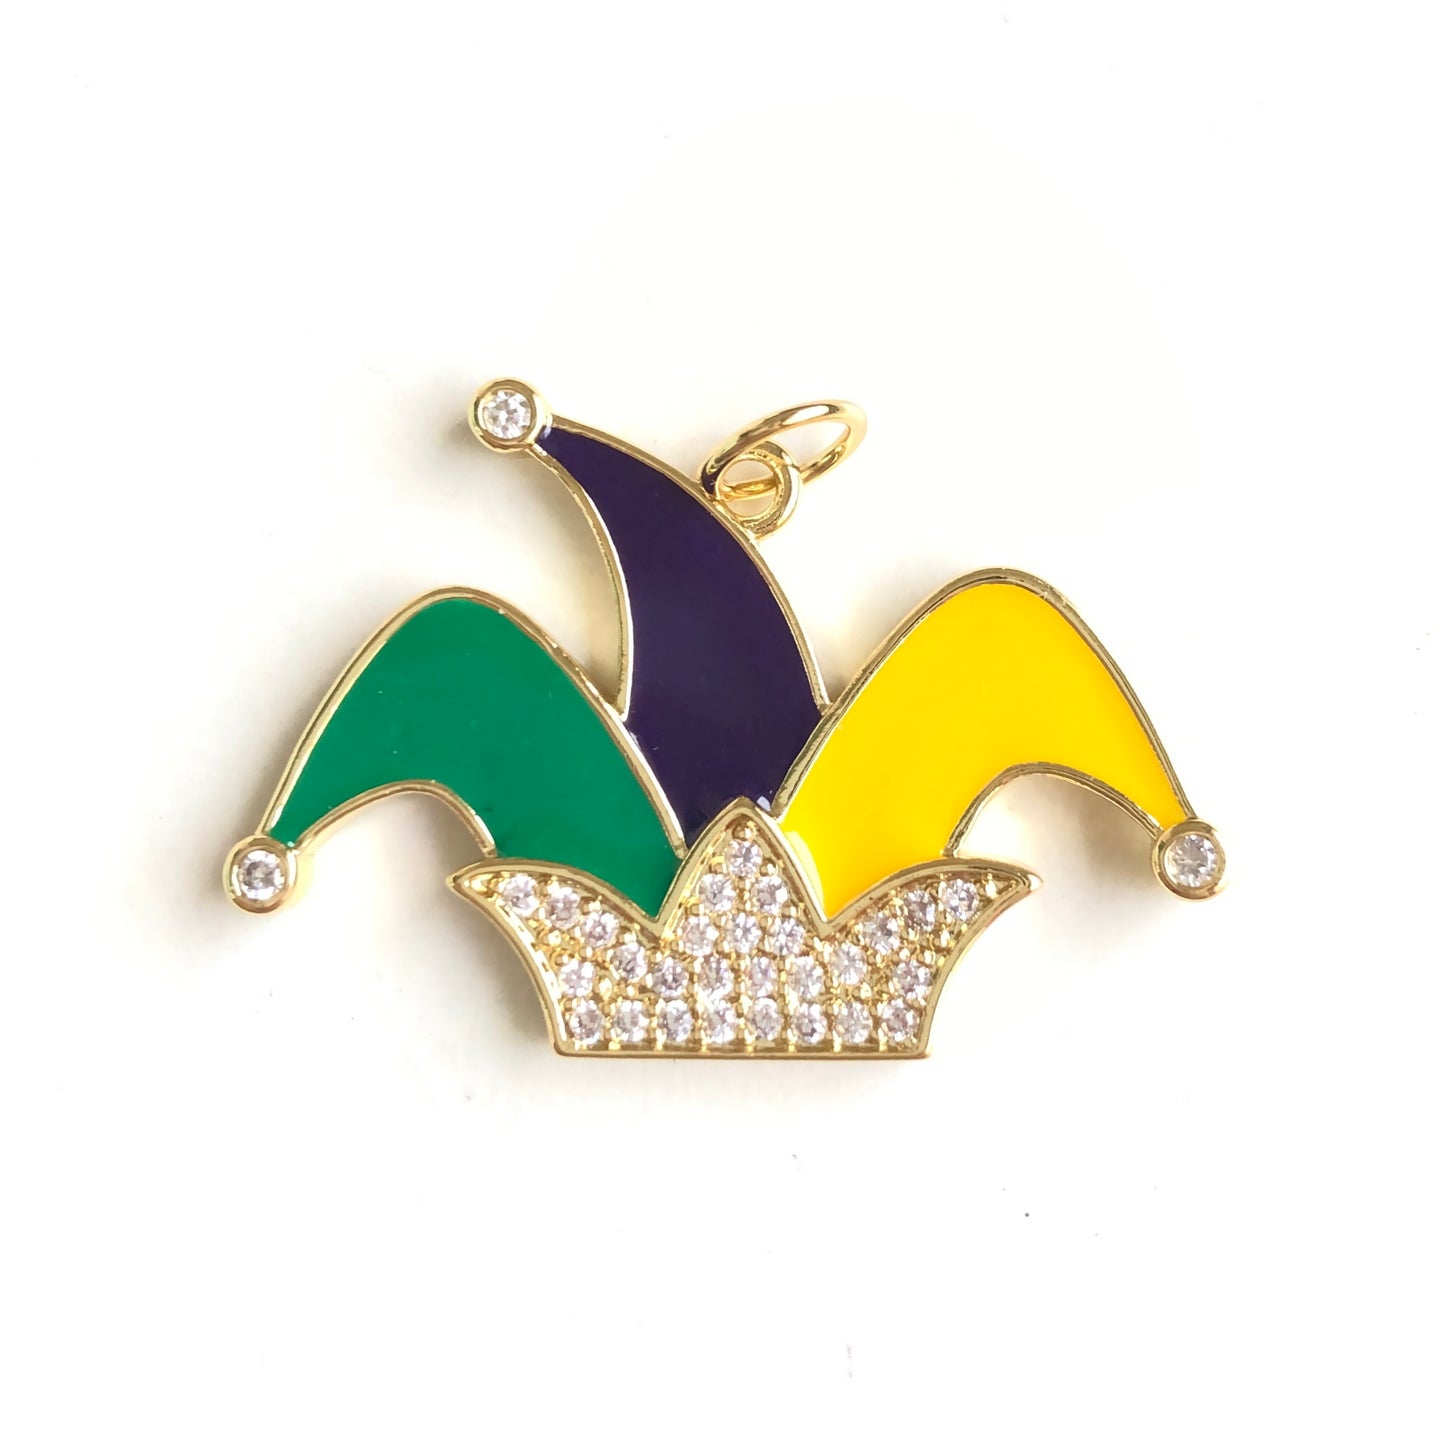 10pcs/lot CZ Paved Mardi Gras Joker Hat Charm Pendants Gold CZ Paved Charms Mardi Gras New Charms Arrivals Charms Beads Beyond